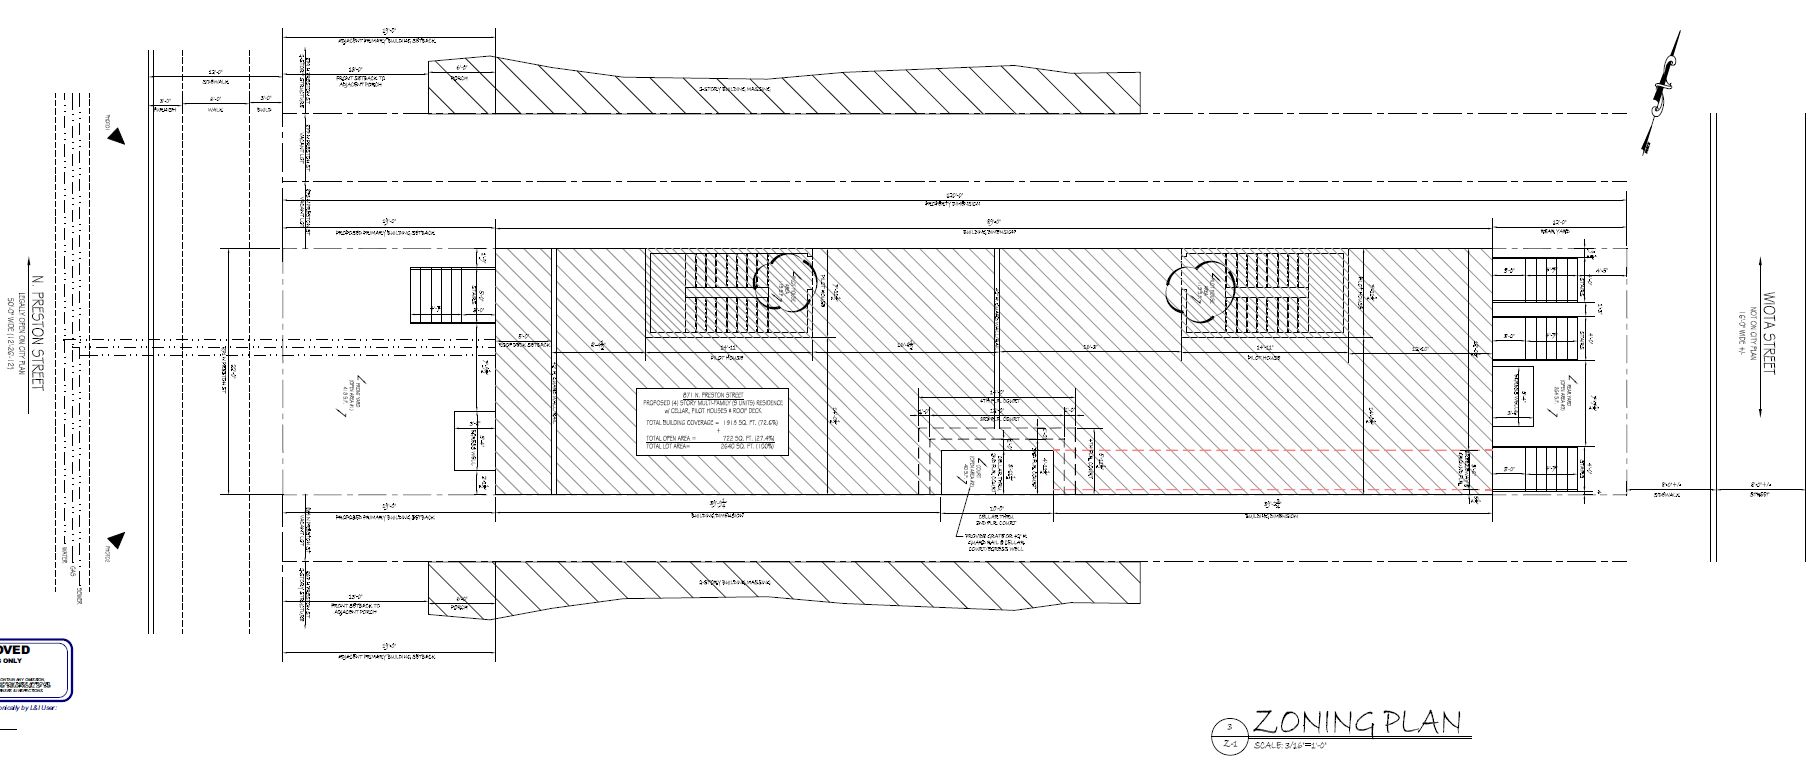 871 North Preston Street. Site plan. Credit: KCA Design Associates via the City of Philadelphia